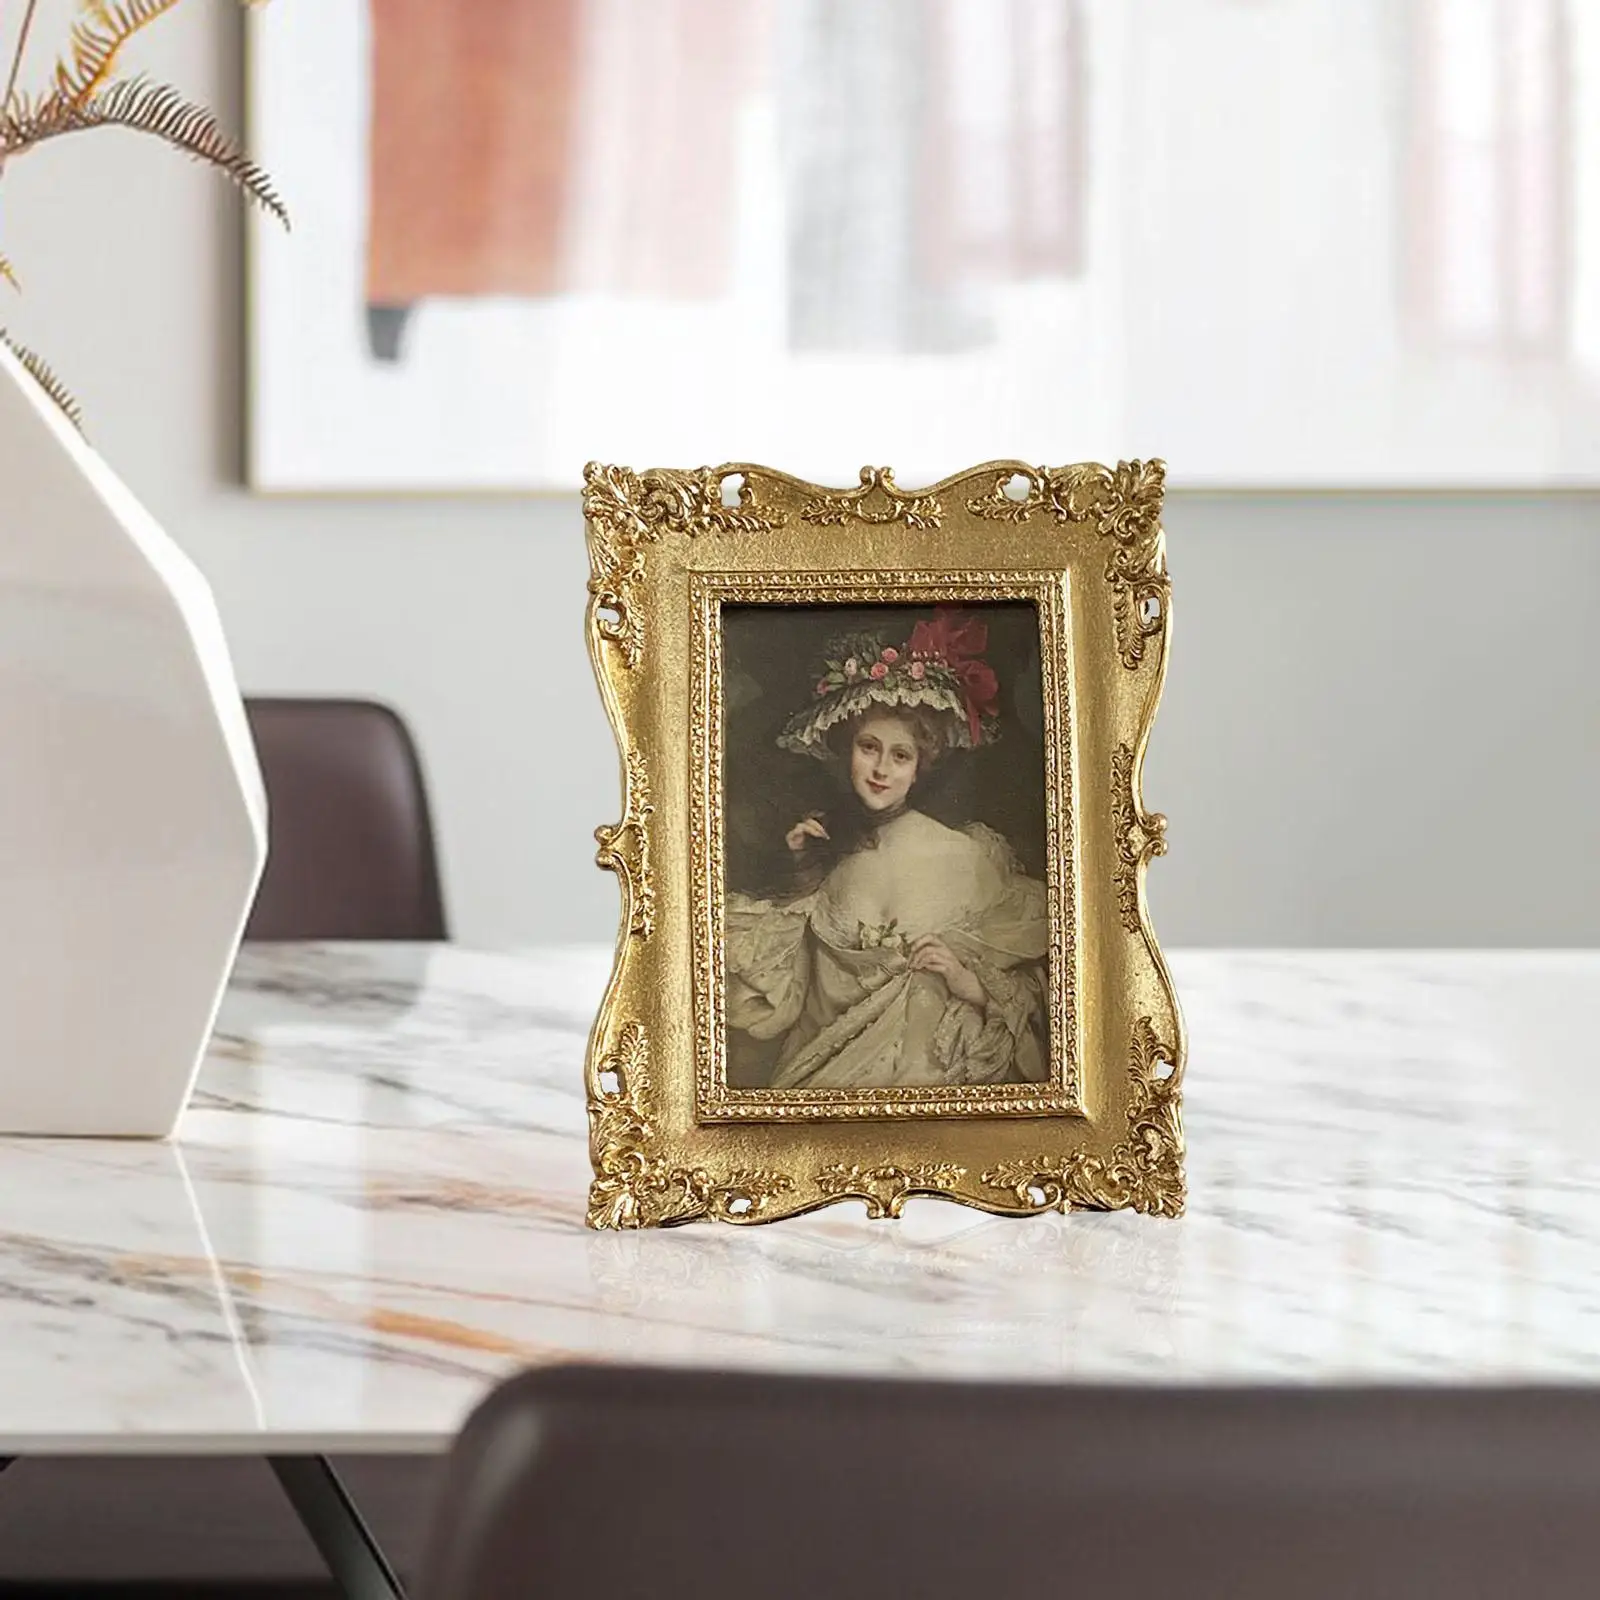 Vintage Style Resin Photo Frame Picture Holder Tabletop Hanging Embossed Frame Ornate for Living Room Hallway Holiday Decor Gift